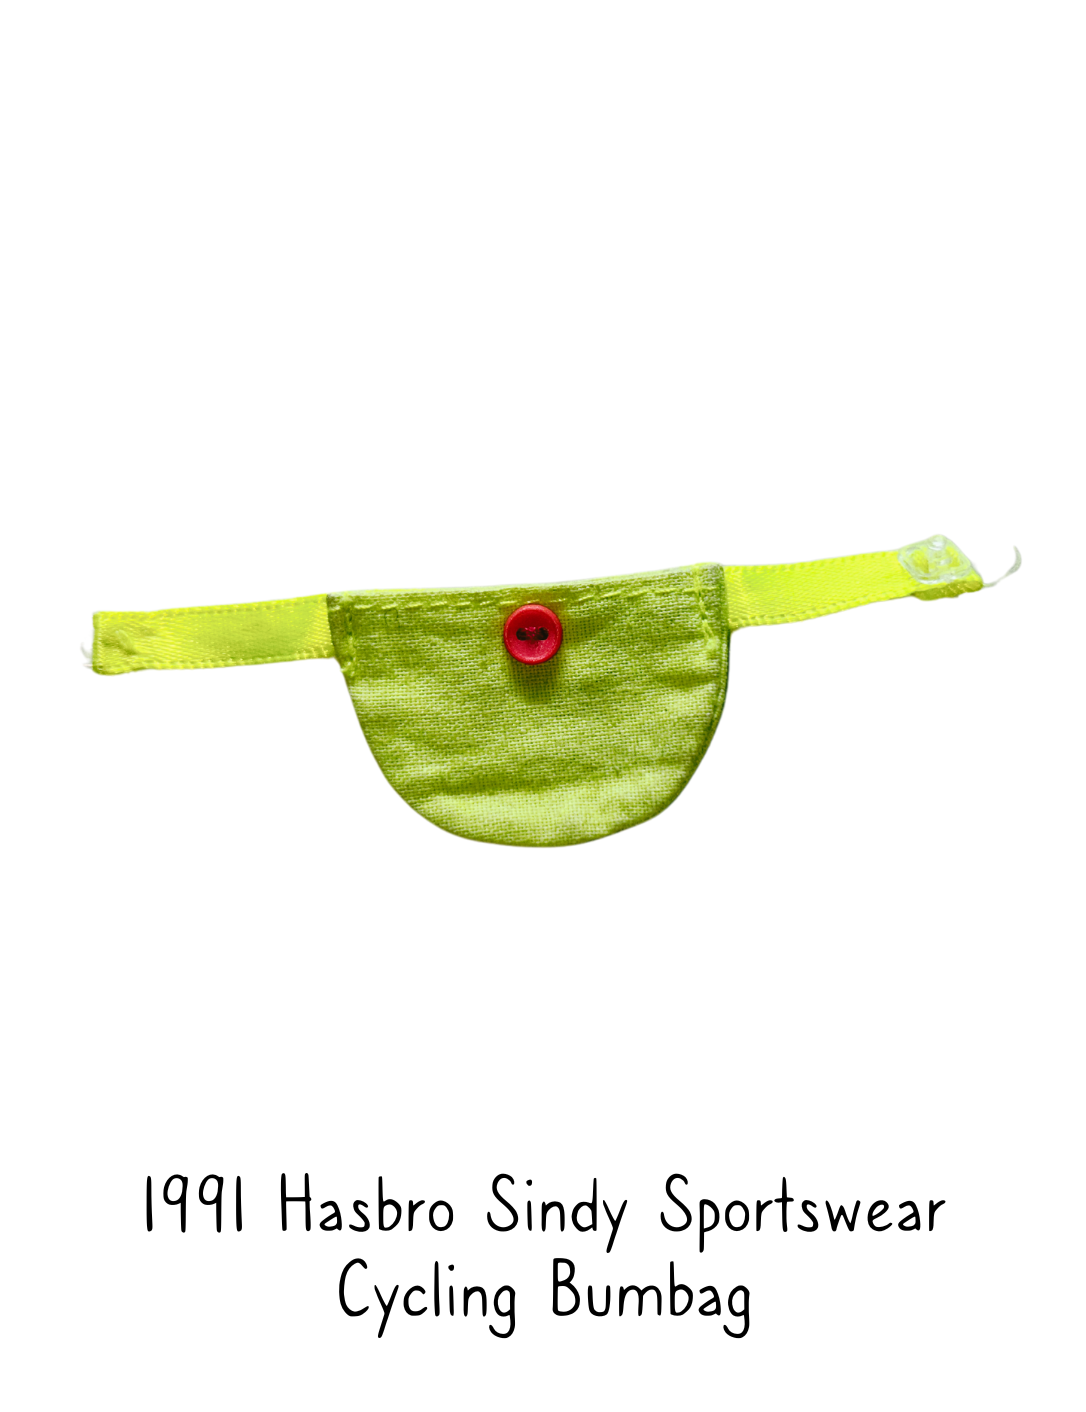 1991 Hasbro Sindy Sportswear Collection Yellow Cycling Bumbag